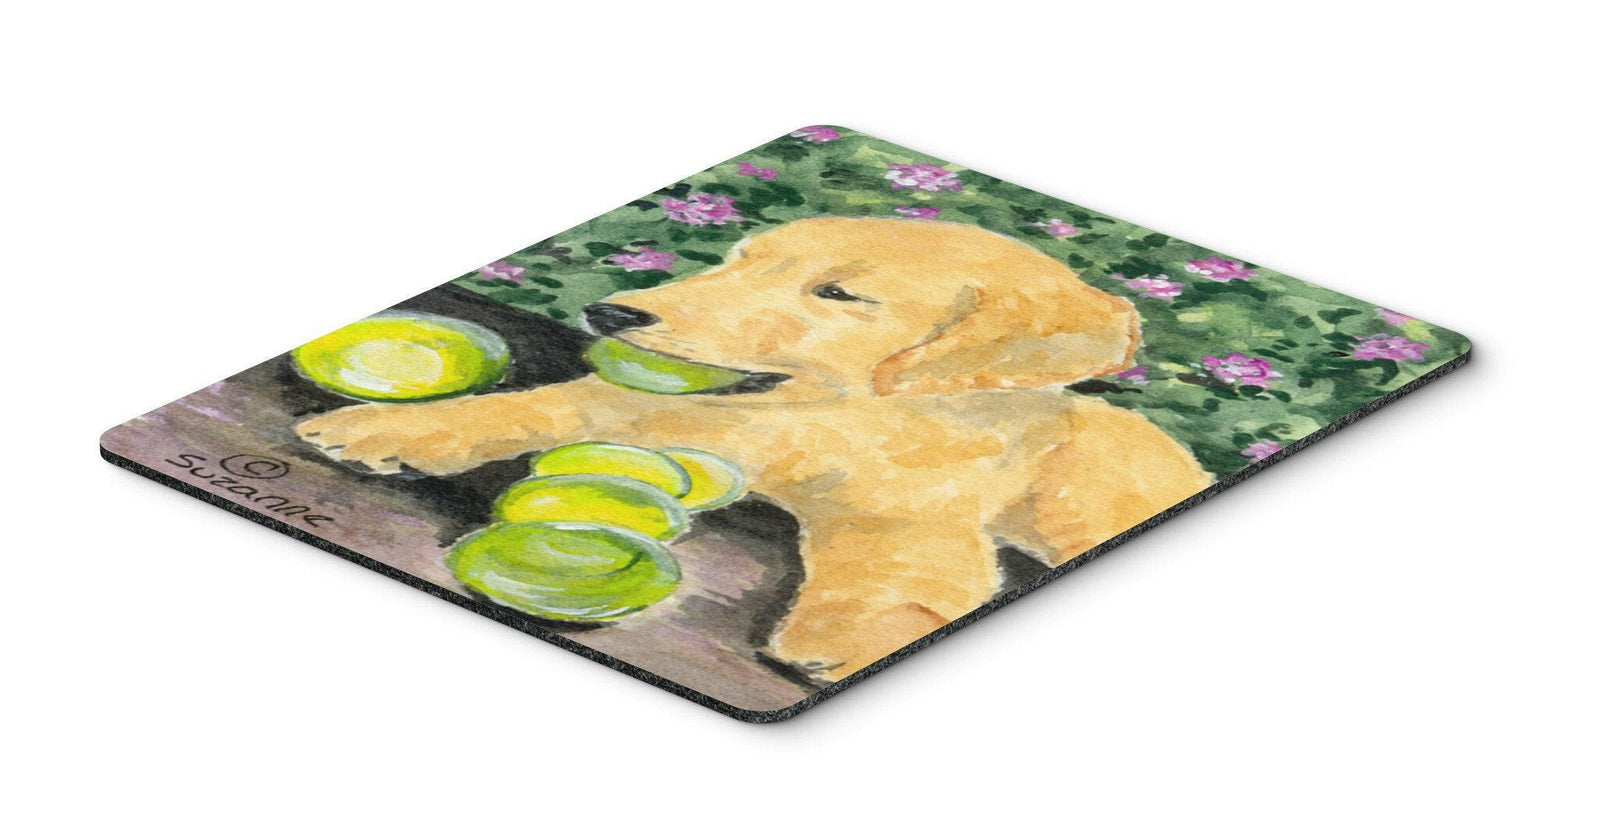 Golden Retriever Mouse Pad / Hot Pad / Trivet by Caroline's Treasures